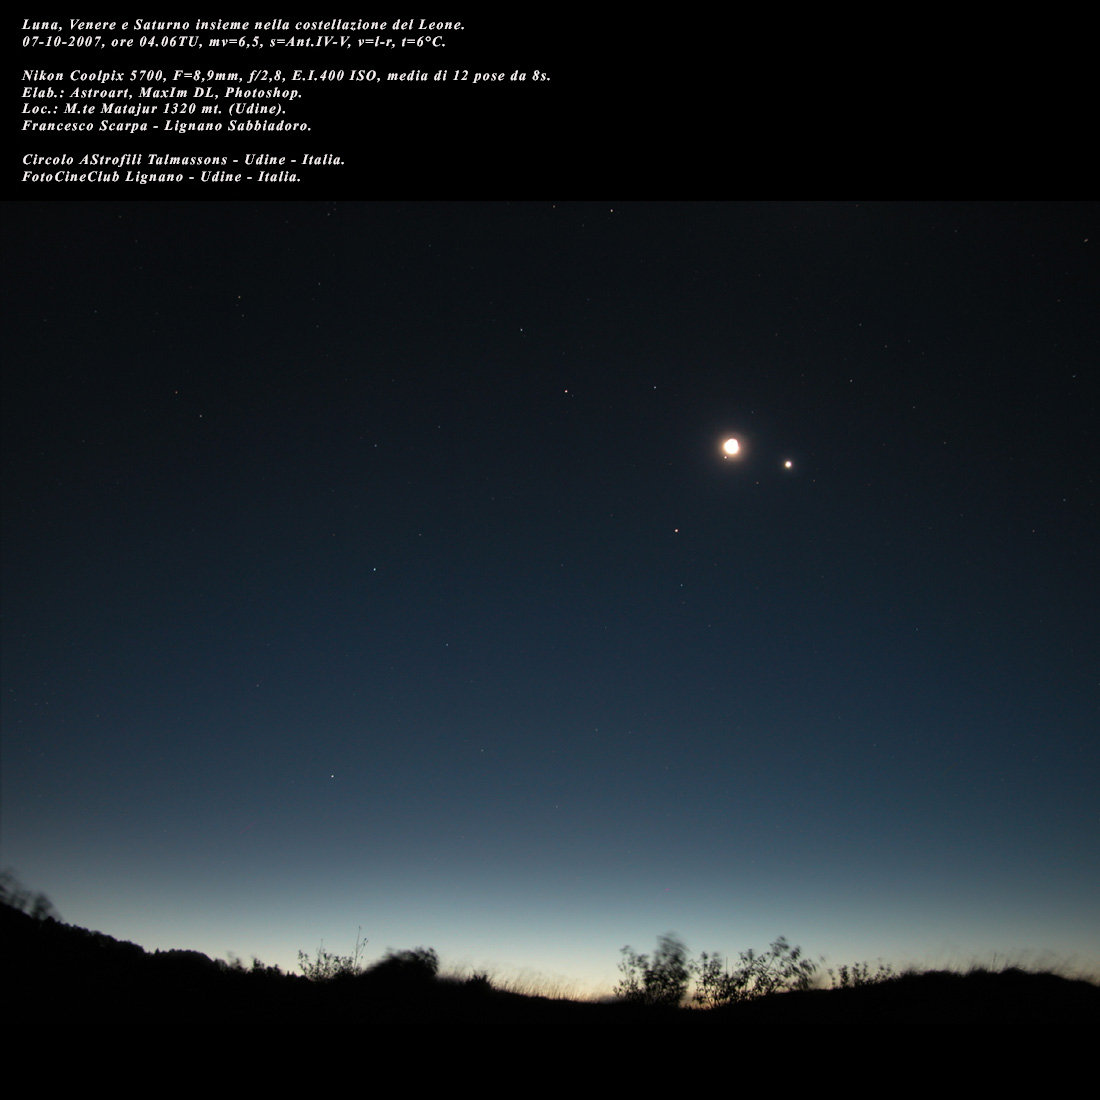 Conjunction Moon-Venus-Saturn-Regulus in october 2007: 163 KB; click on the image to enlarge